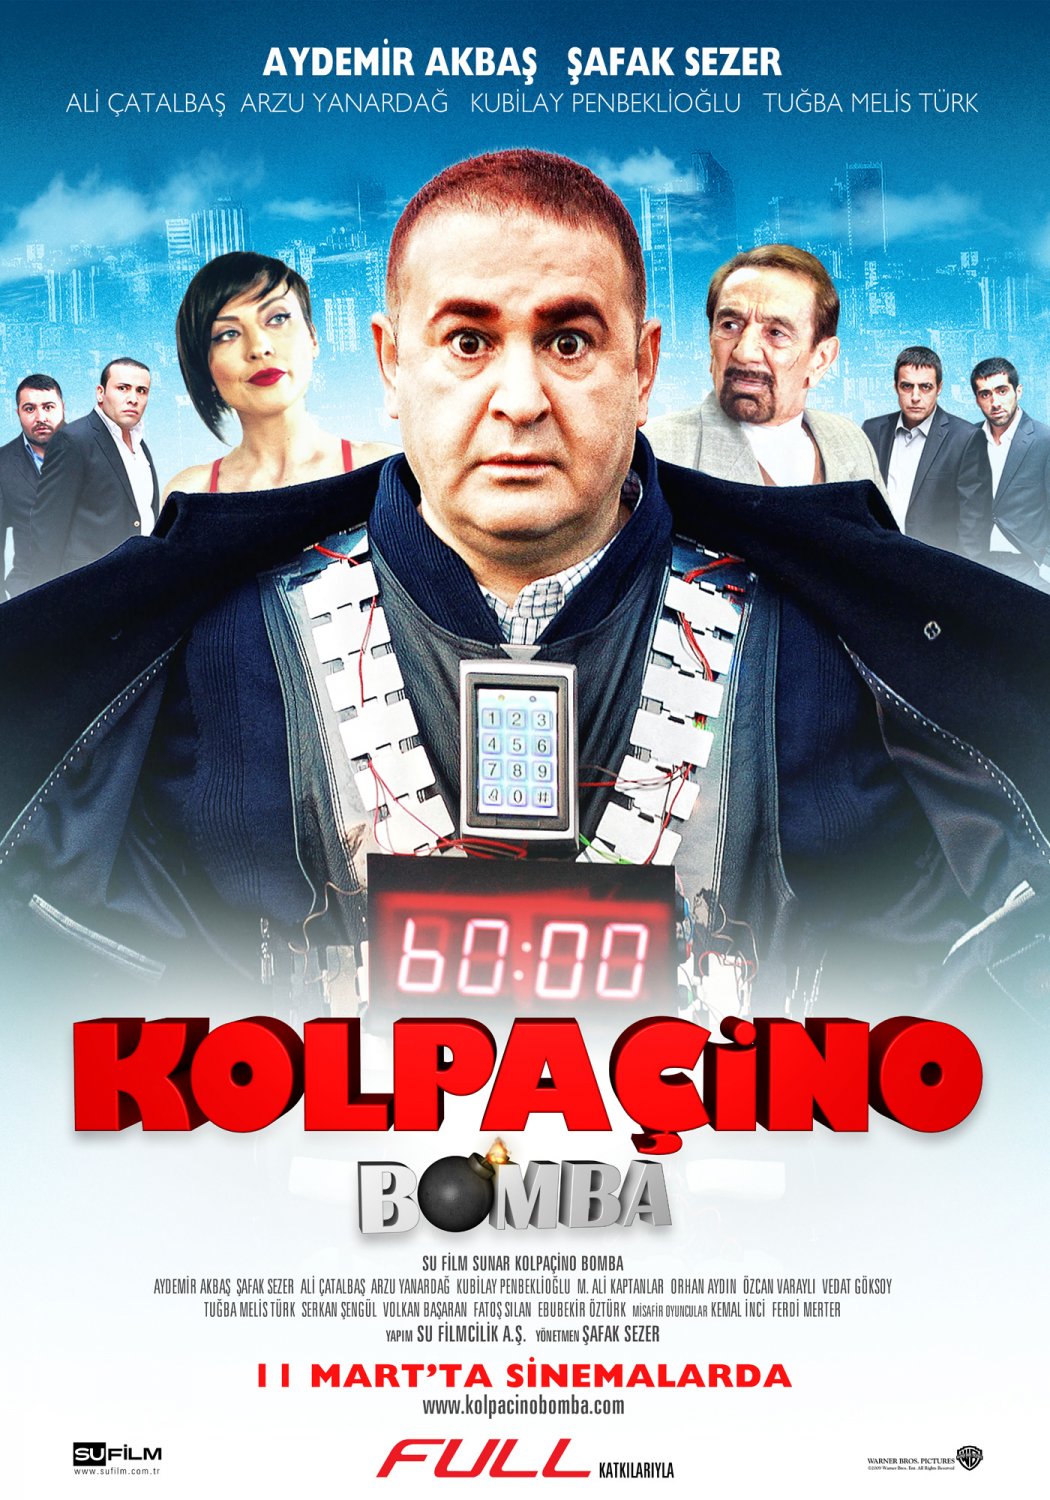 Extra Large Movie Poster Image for Kolpaçino Bomba (#1 of 3)